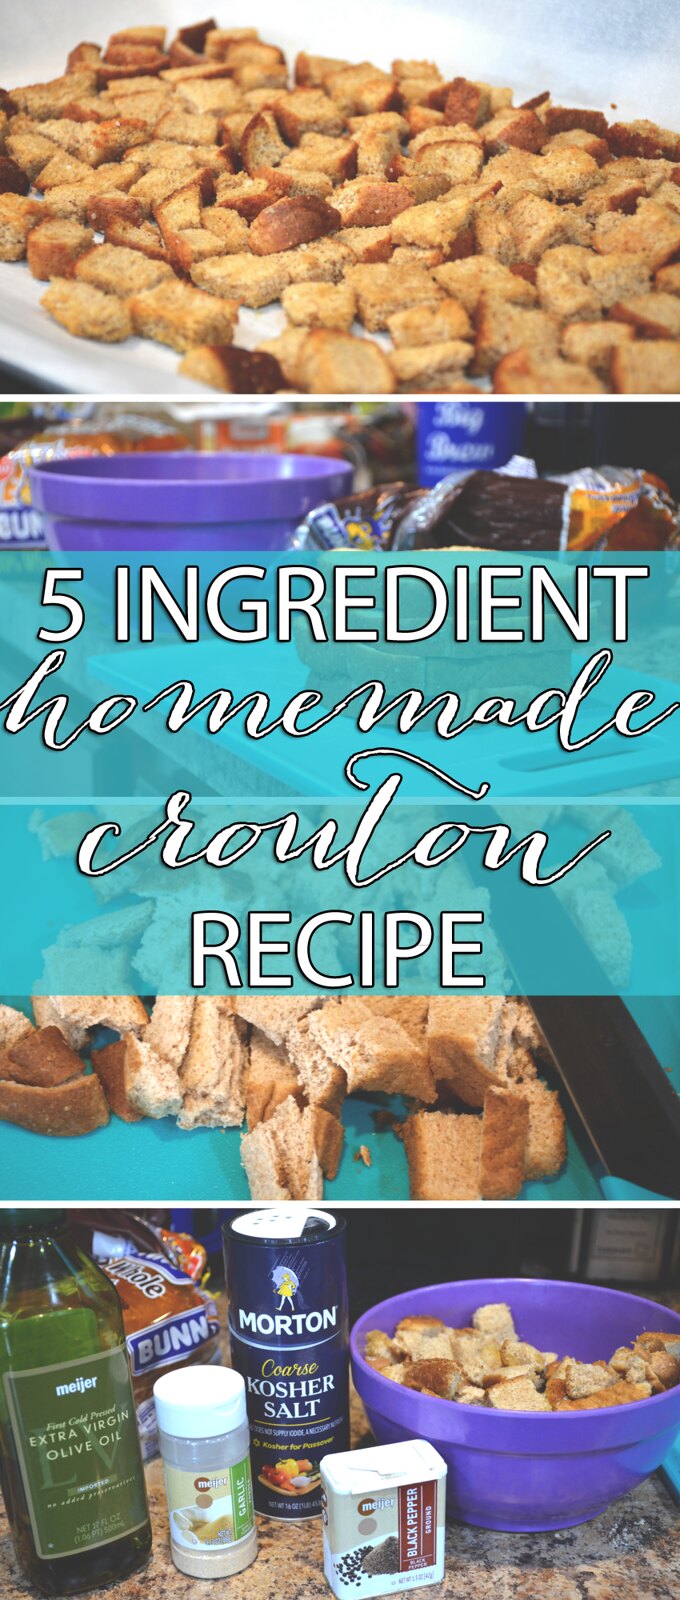 5 Ingredient Homemade Croutons Recipe